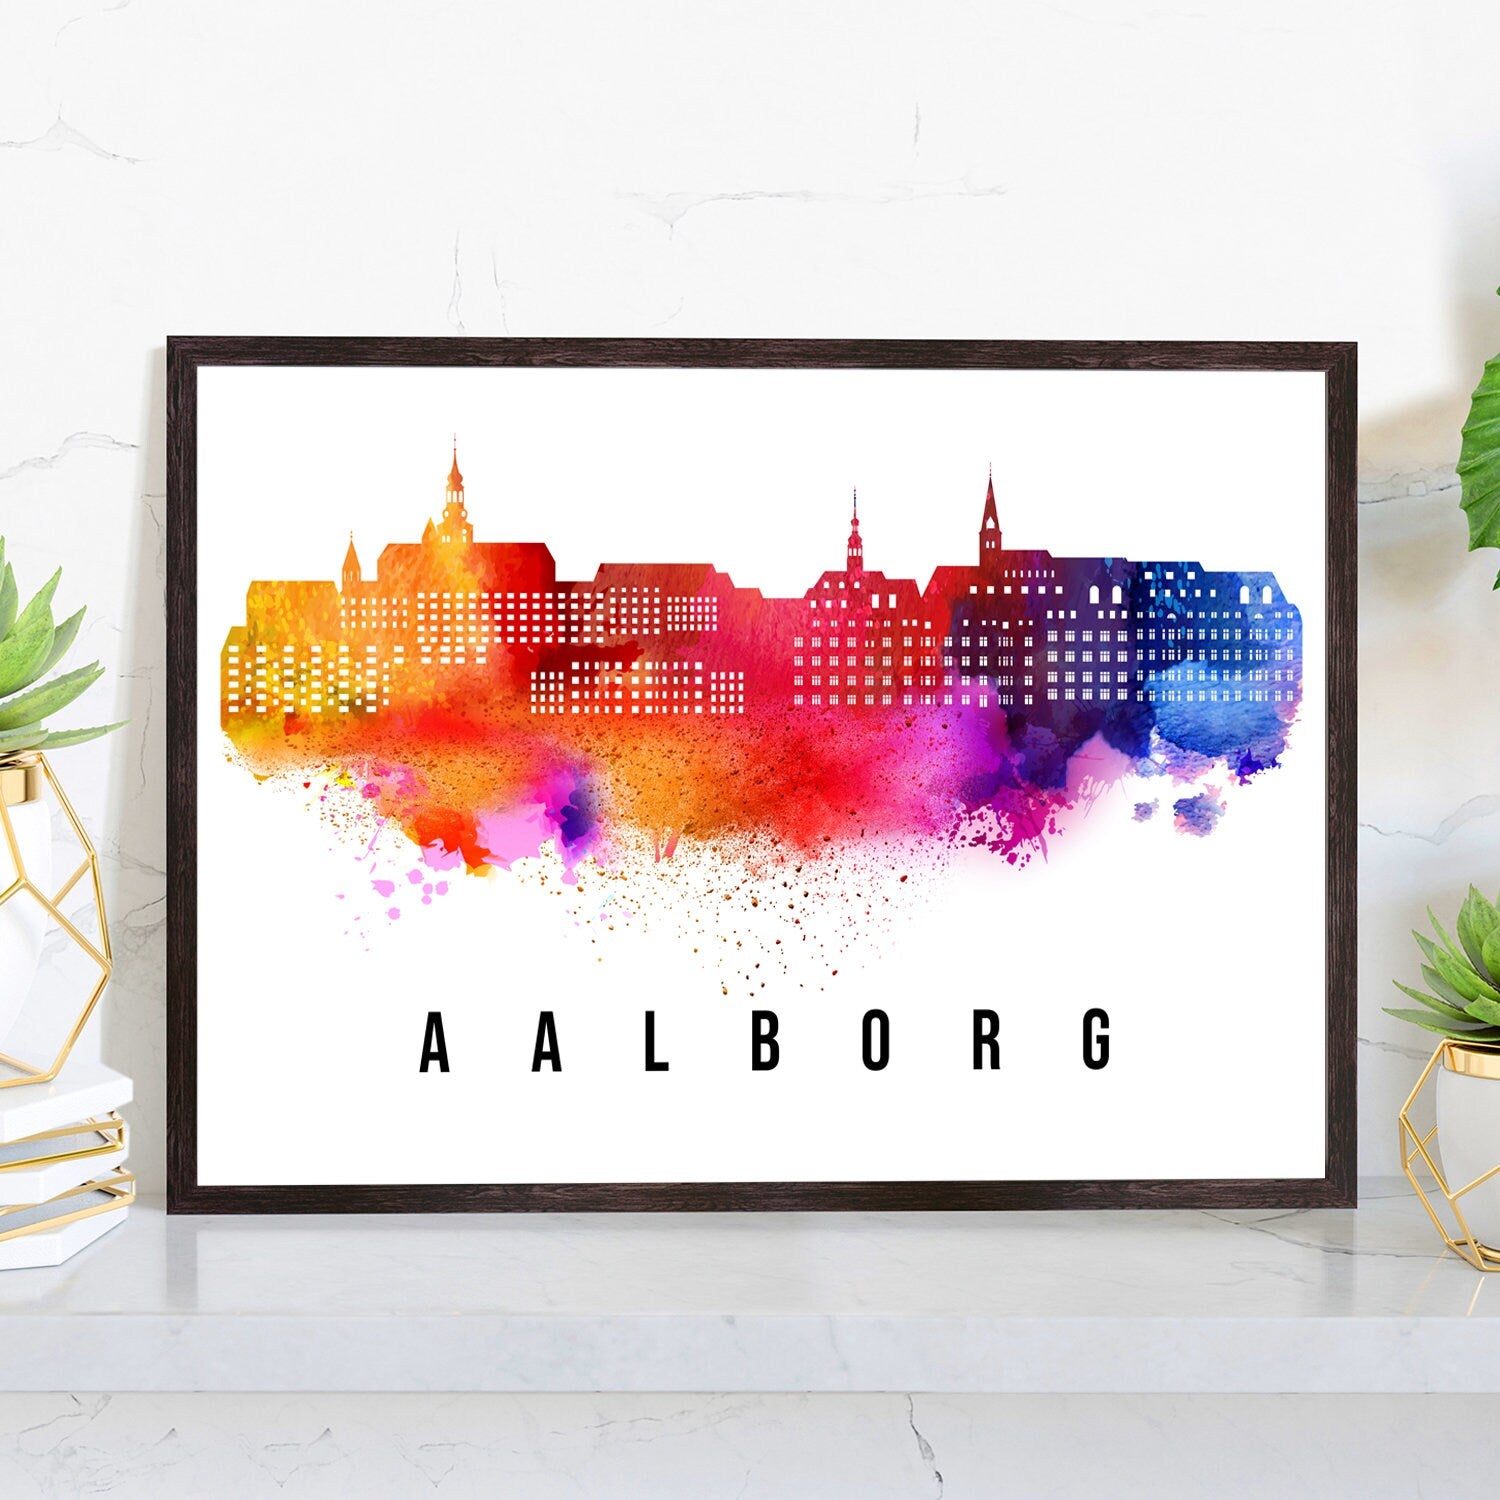 Aalborg Denmark Poster, Skyline poster cityscape poster, Landmark City Illustration poster, Home wall decoration, Office wall art